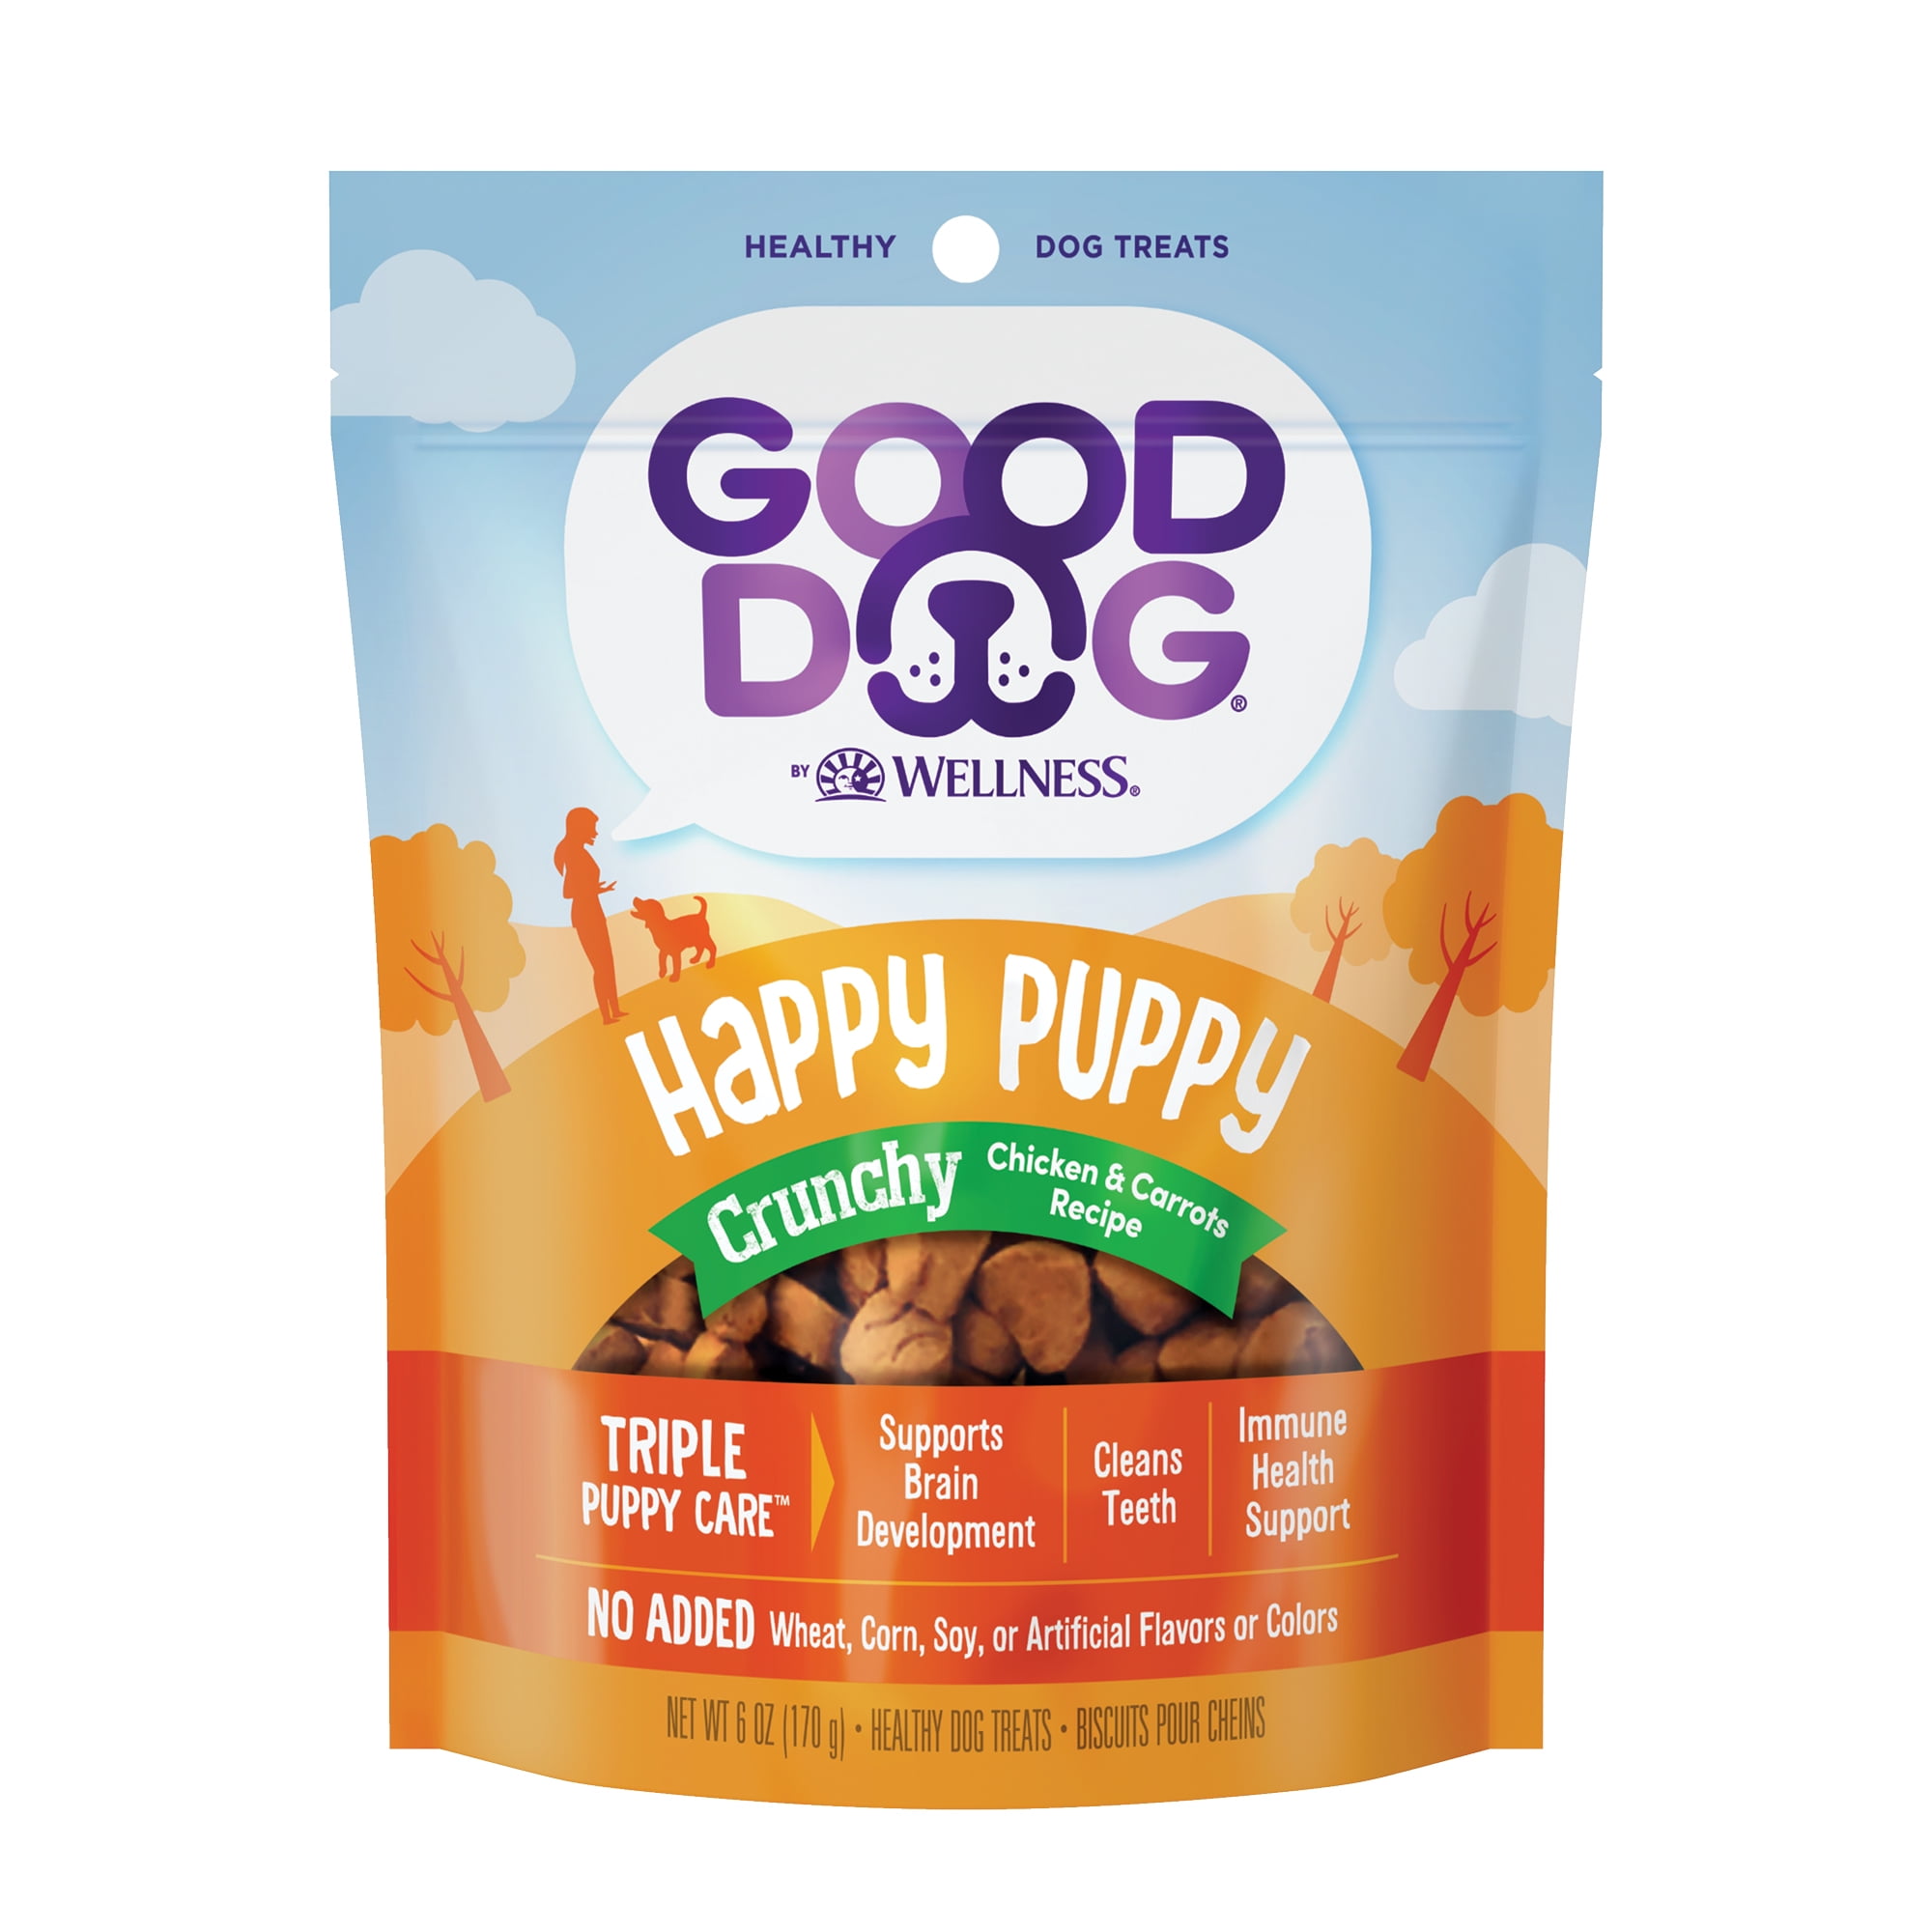 Good Dog by Wellness Happy Puppy Treats Chicken & Carrots Recipe, 6 Ounce Bag